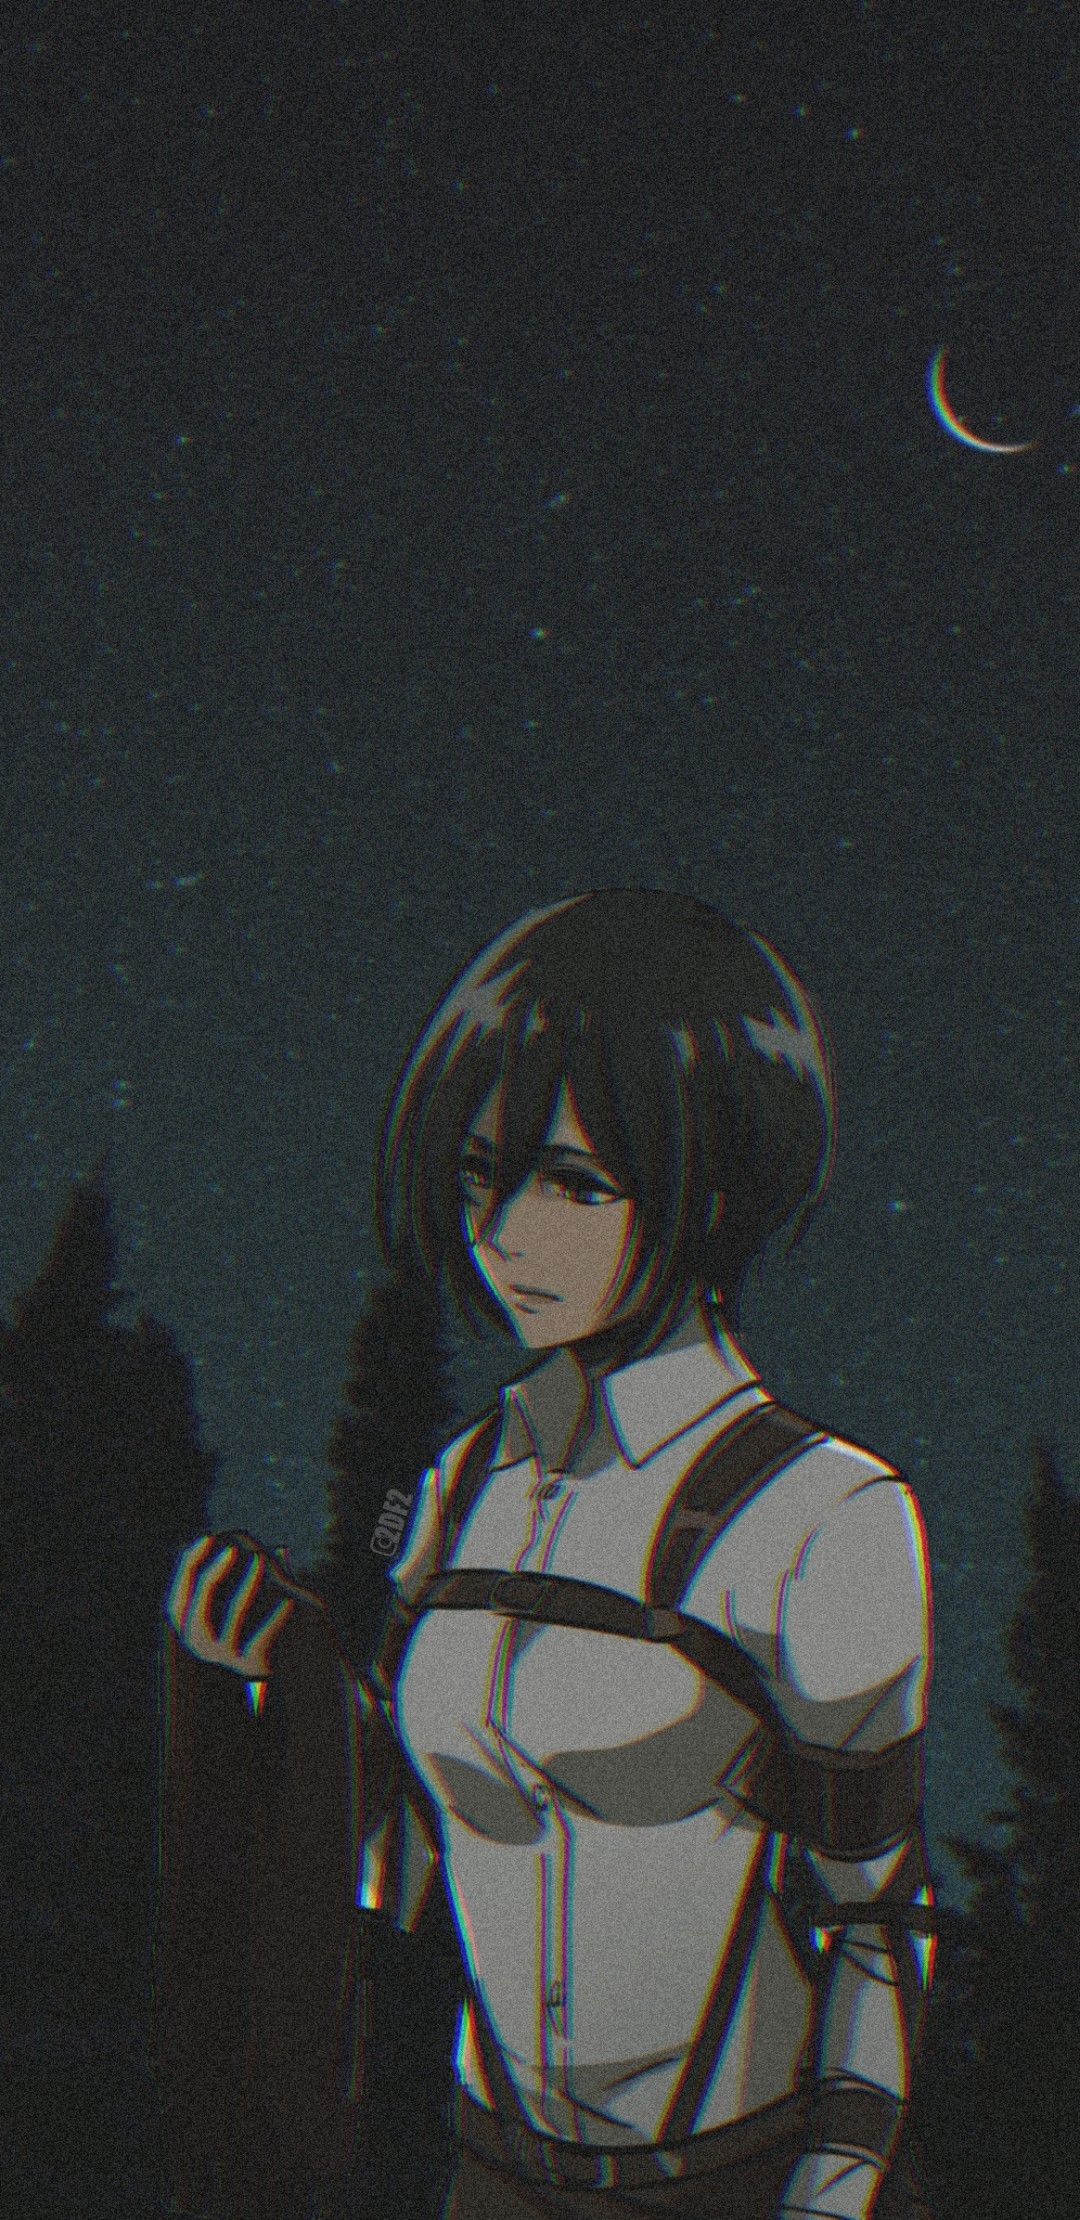 Mikasa Attack On Titan Wallpaper Anime